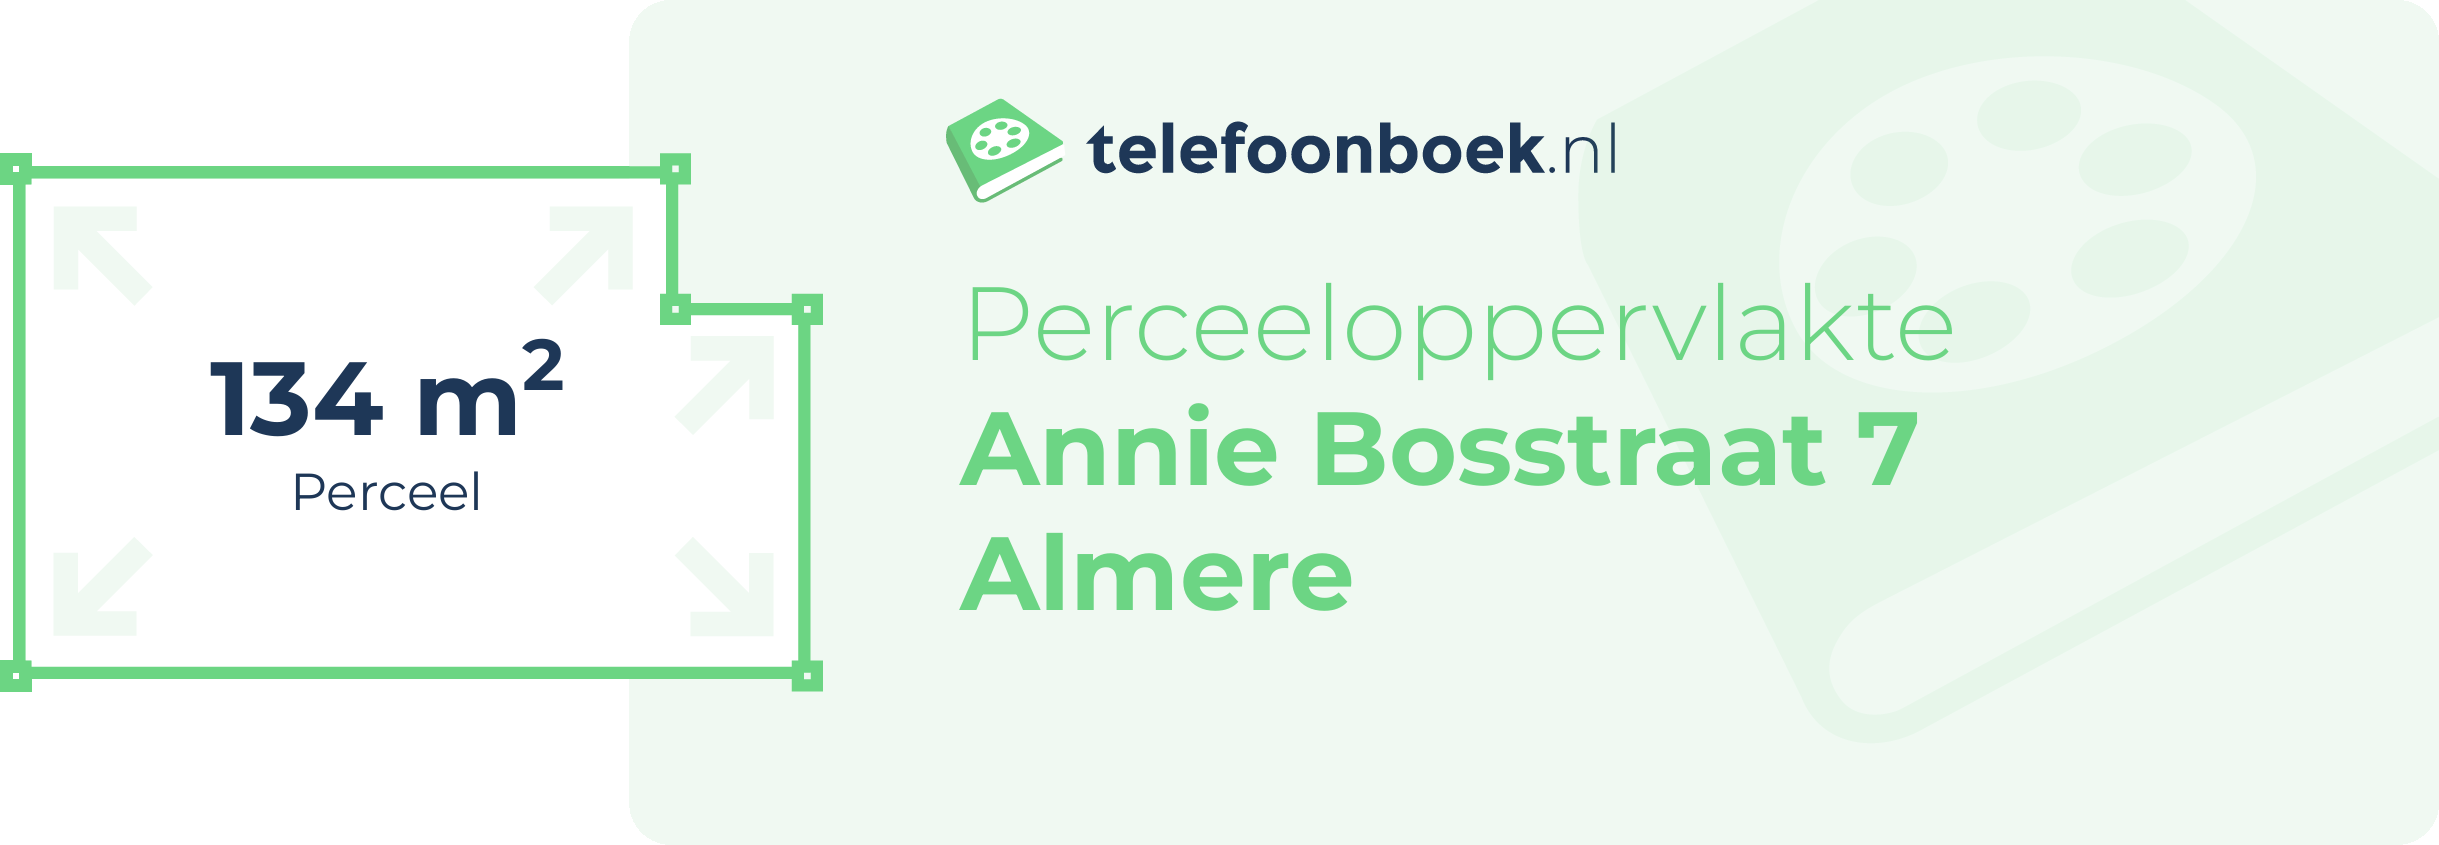 Perceeloppervlakte Annie Bosstraat 7 Almere